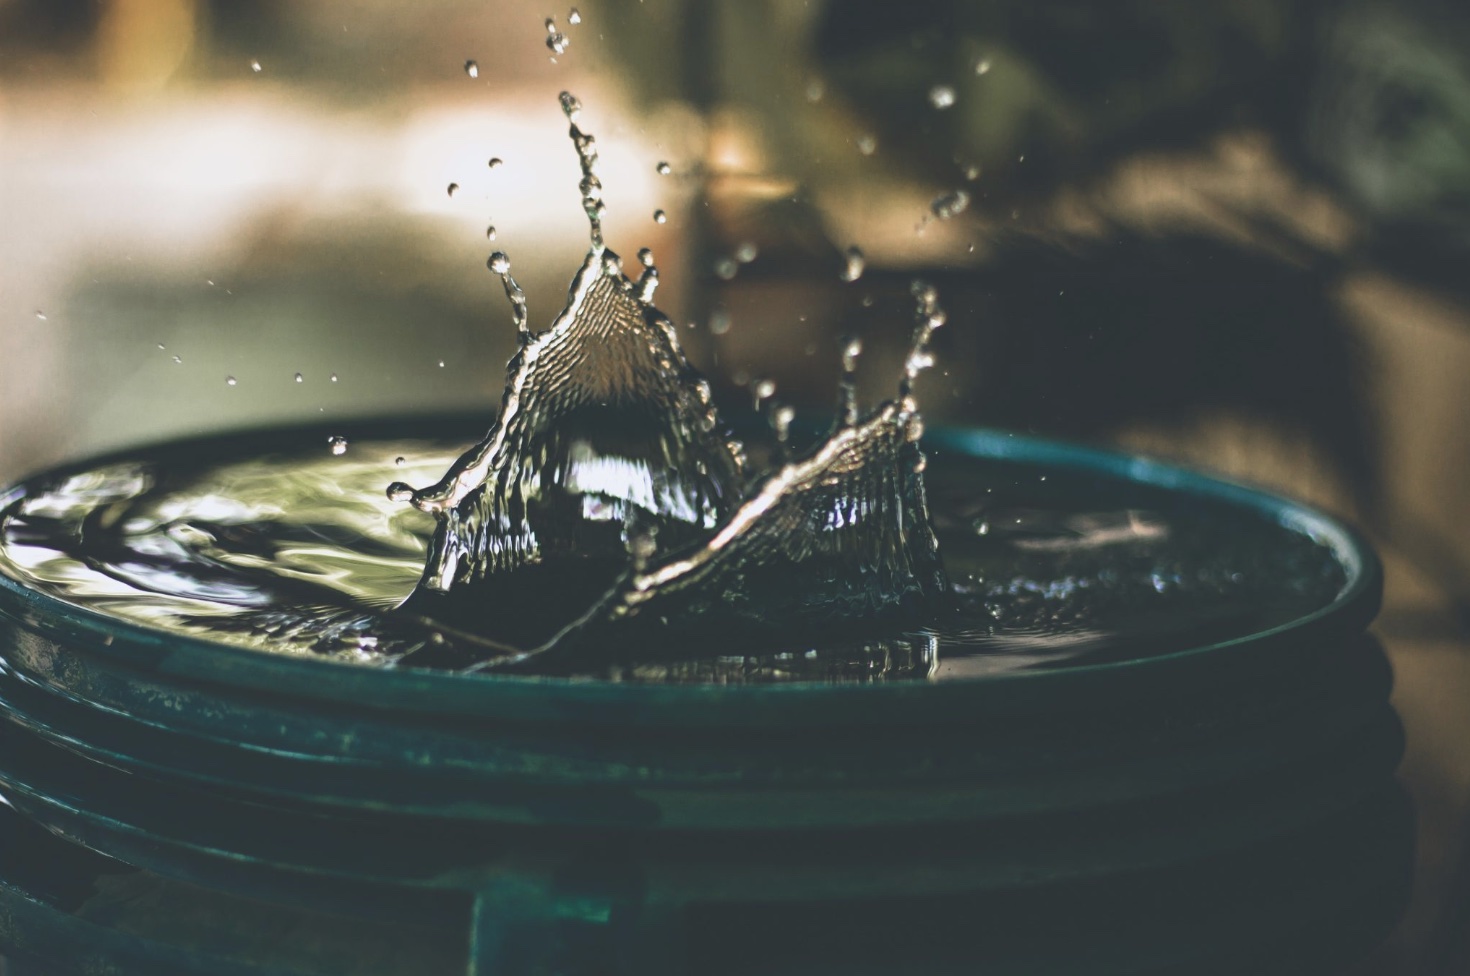 A drop of water in a bucket